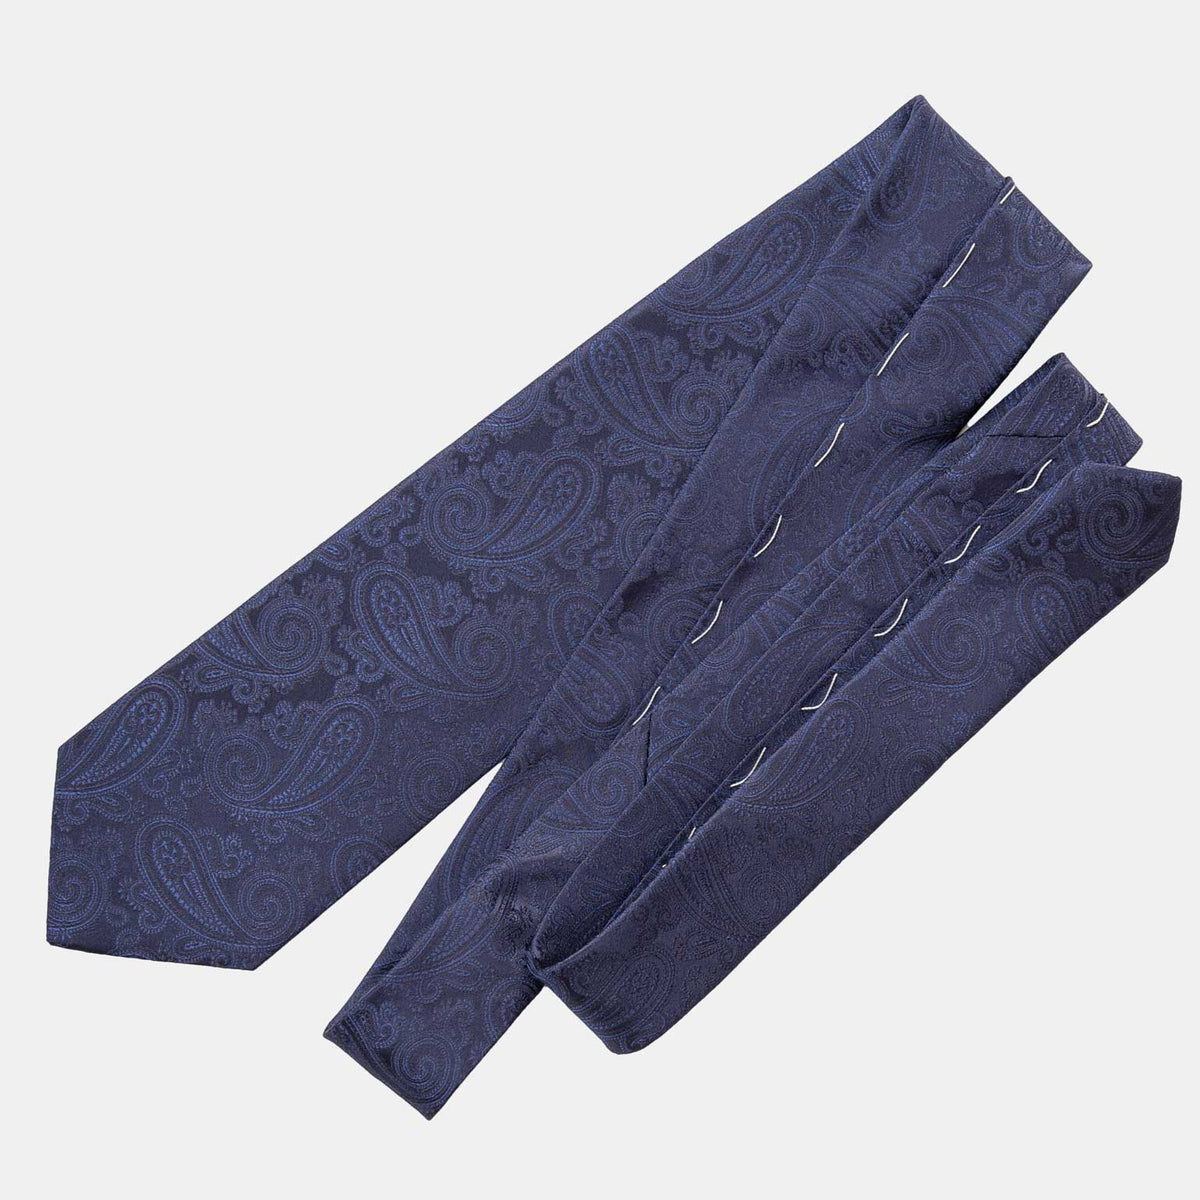 Midnight Blue Silk Paisley Formal Tie - Made in Italy